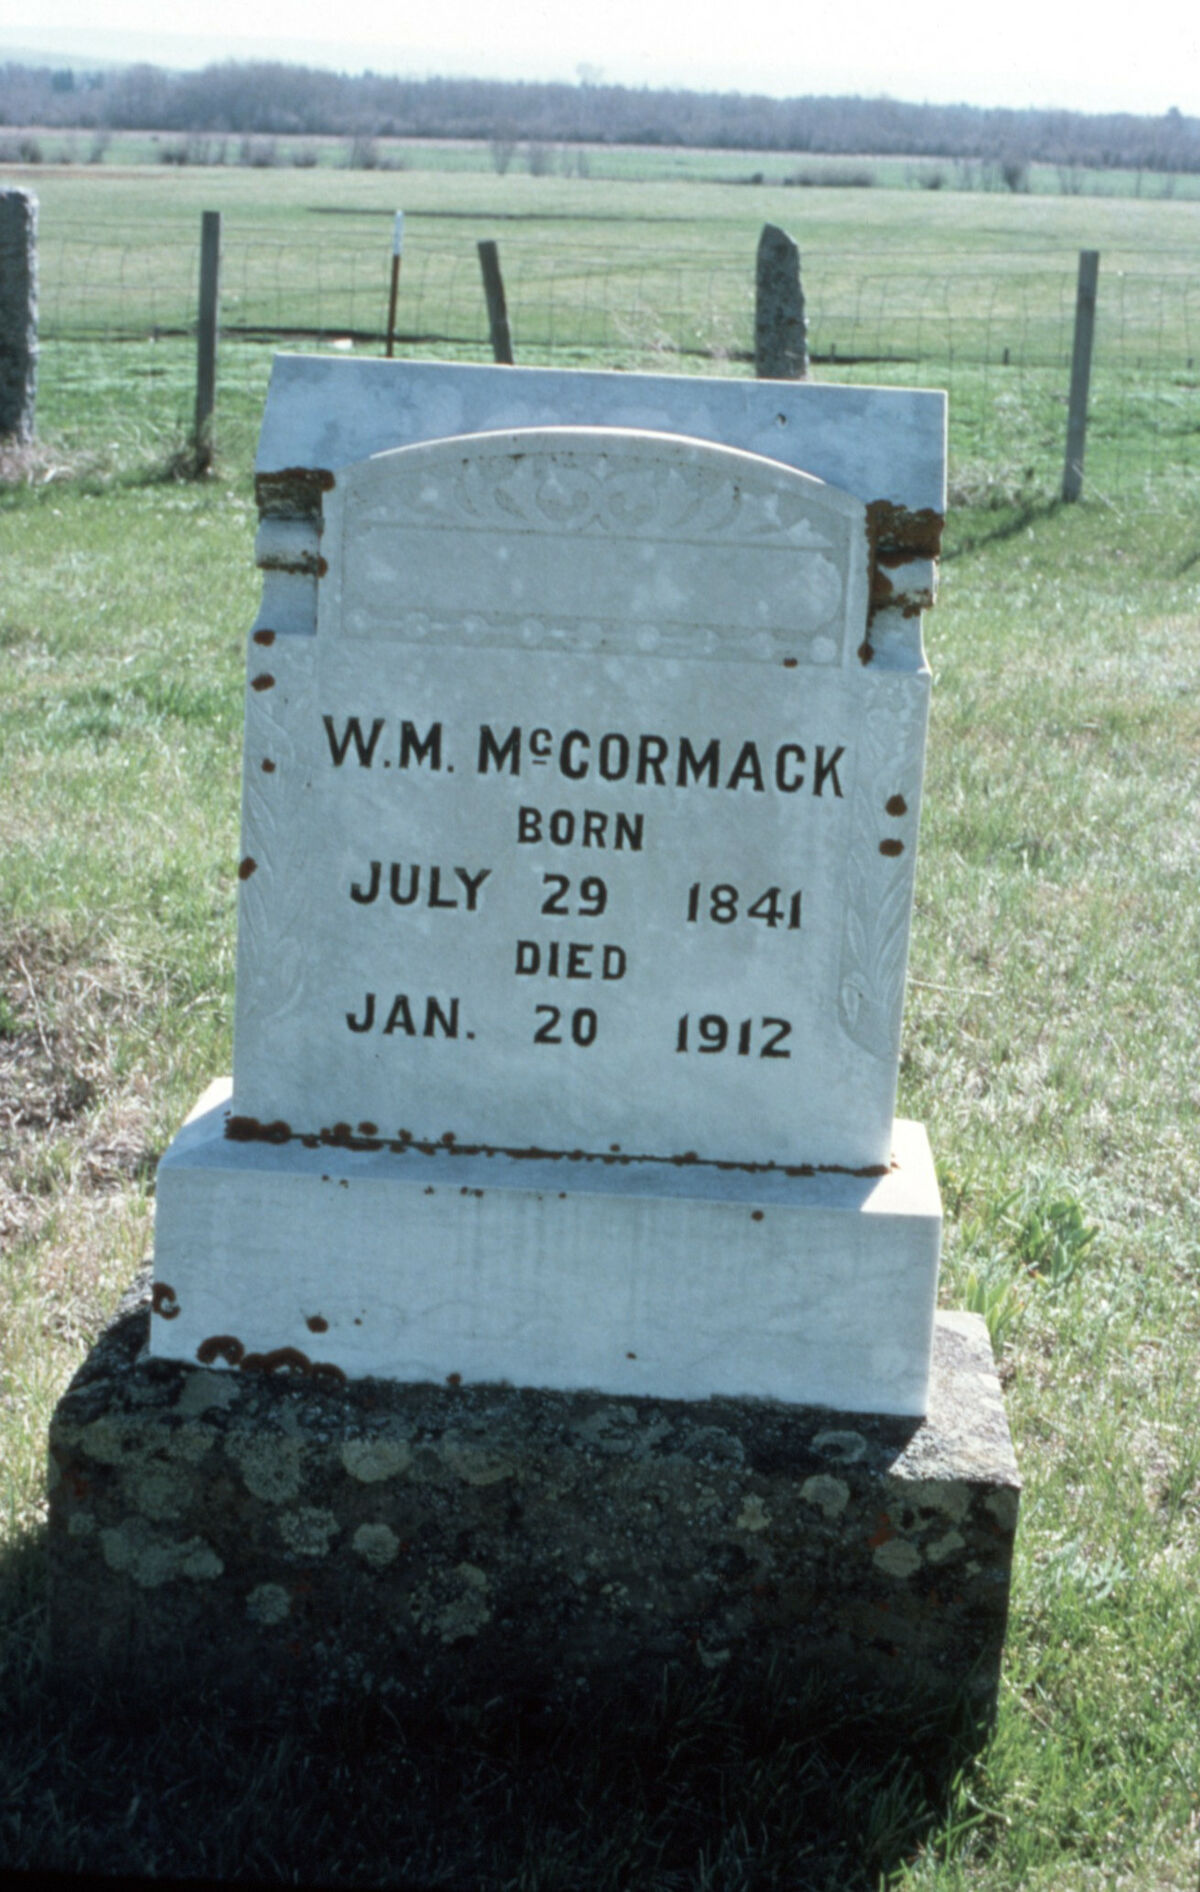 W.M. McCormack's gravestone in the Alder Slope cemetery. Taken by Janie Tippett.